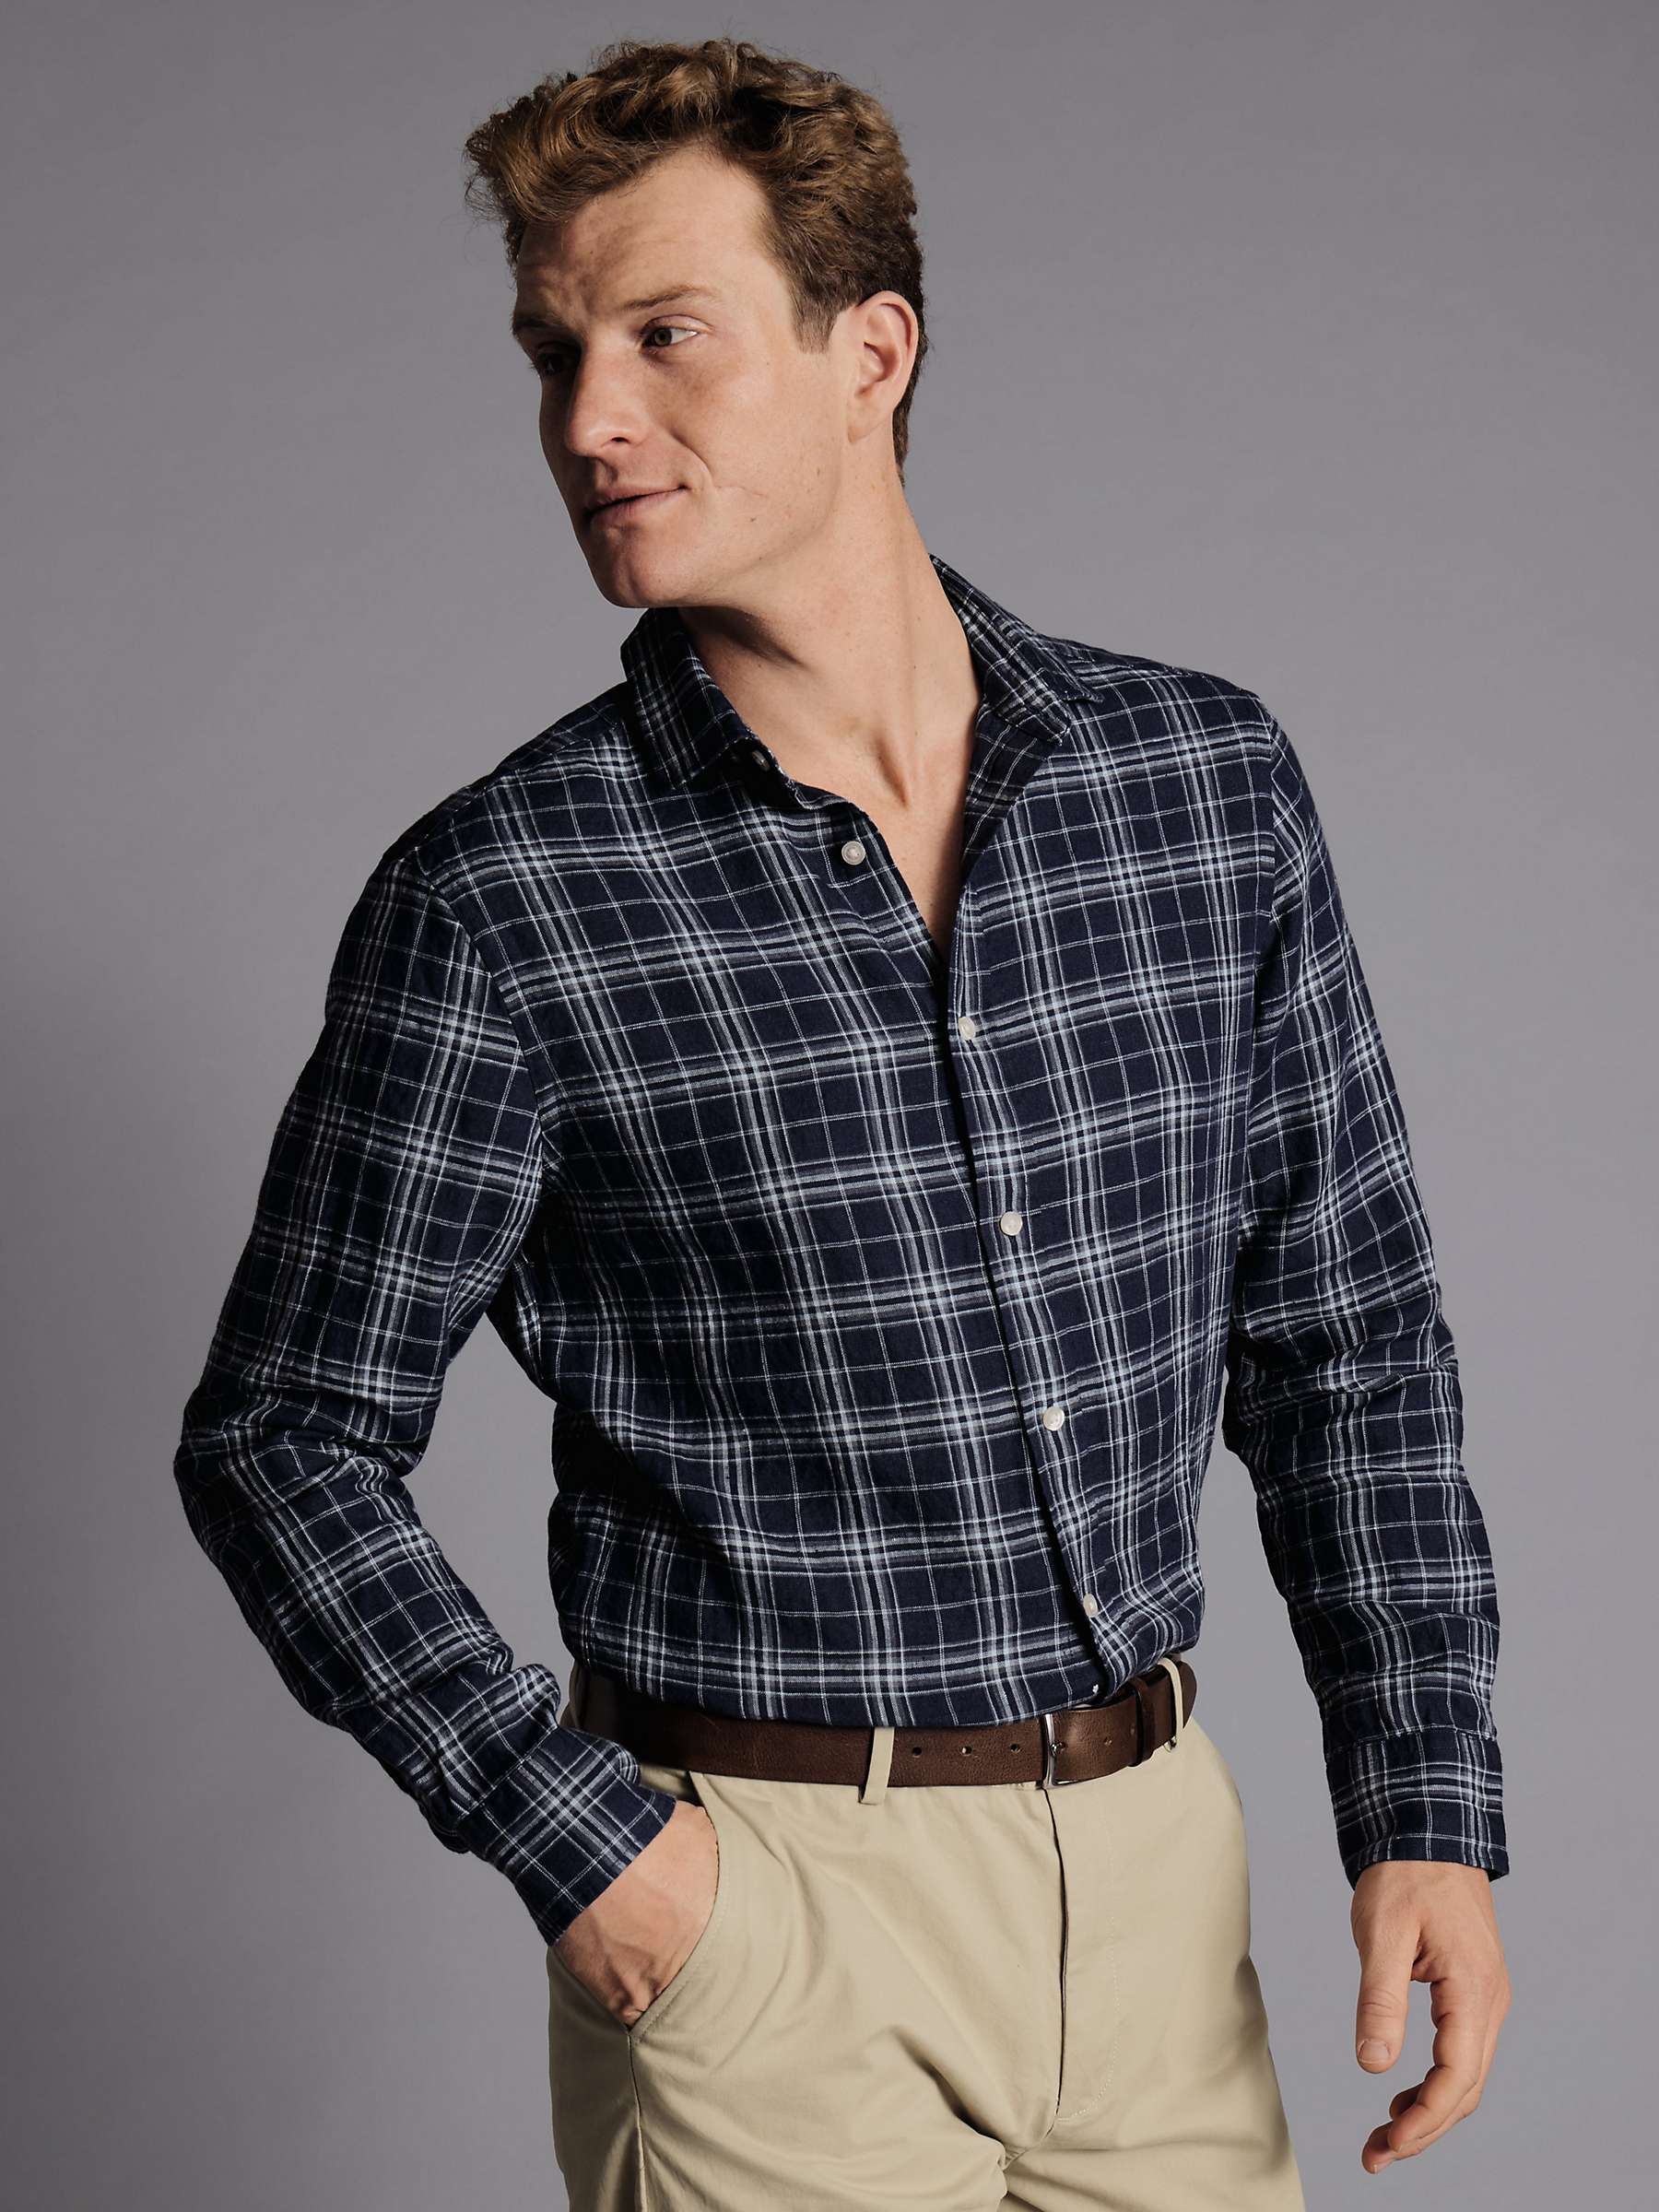 Buy Charles Tyrwhitt Check Slim Fit Linen Shirt, French Blue Online at johnlewis.com